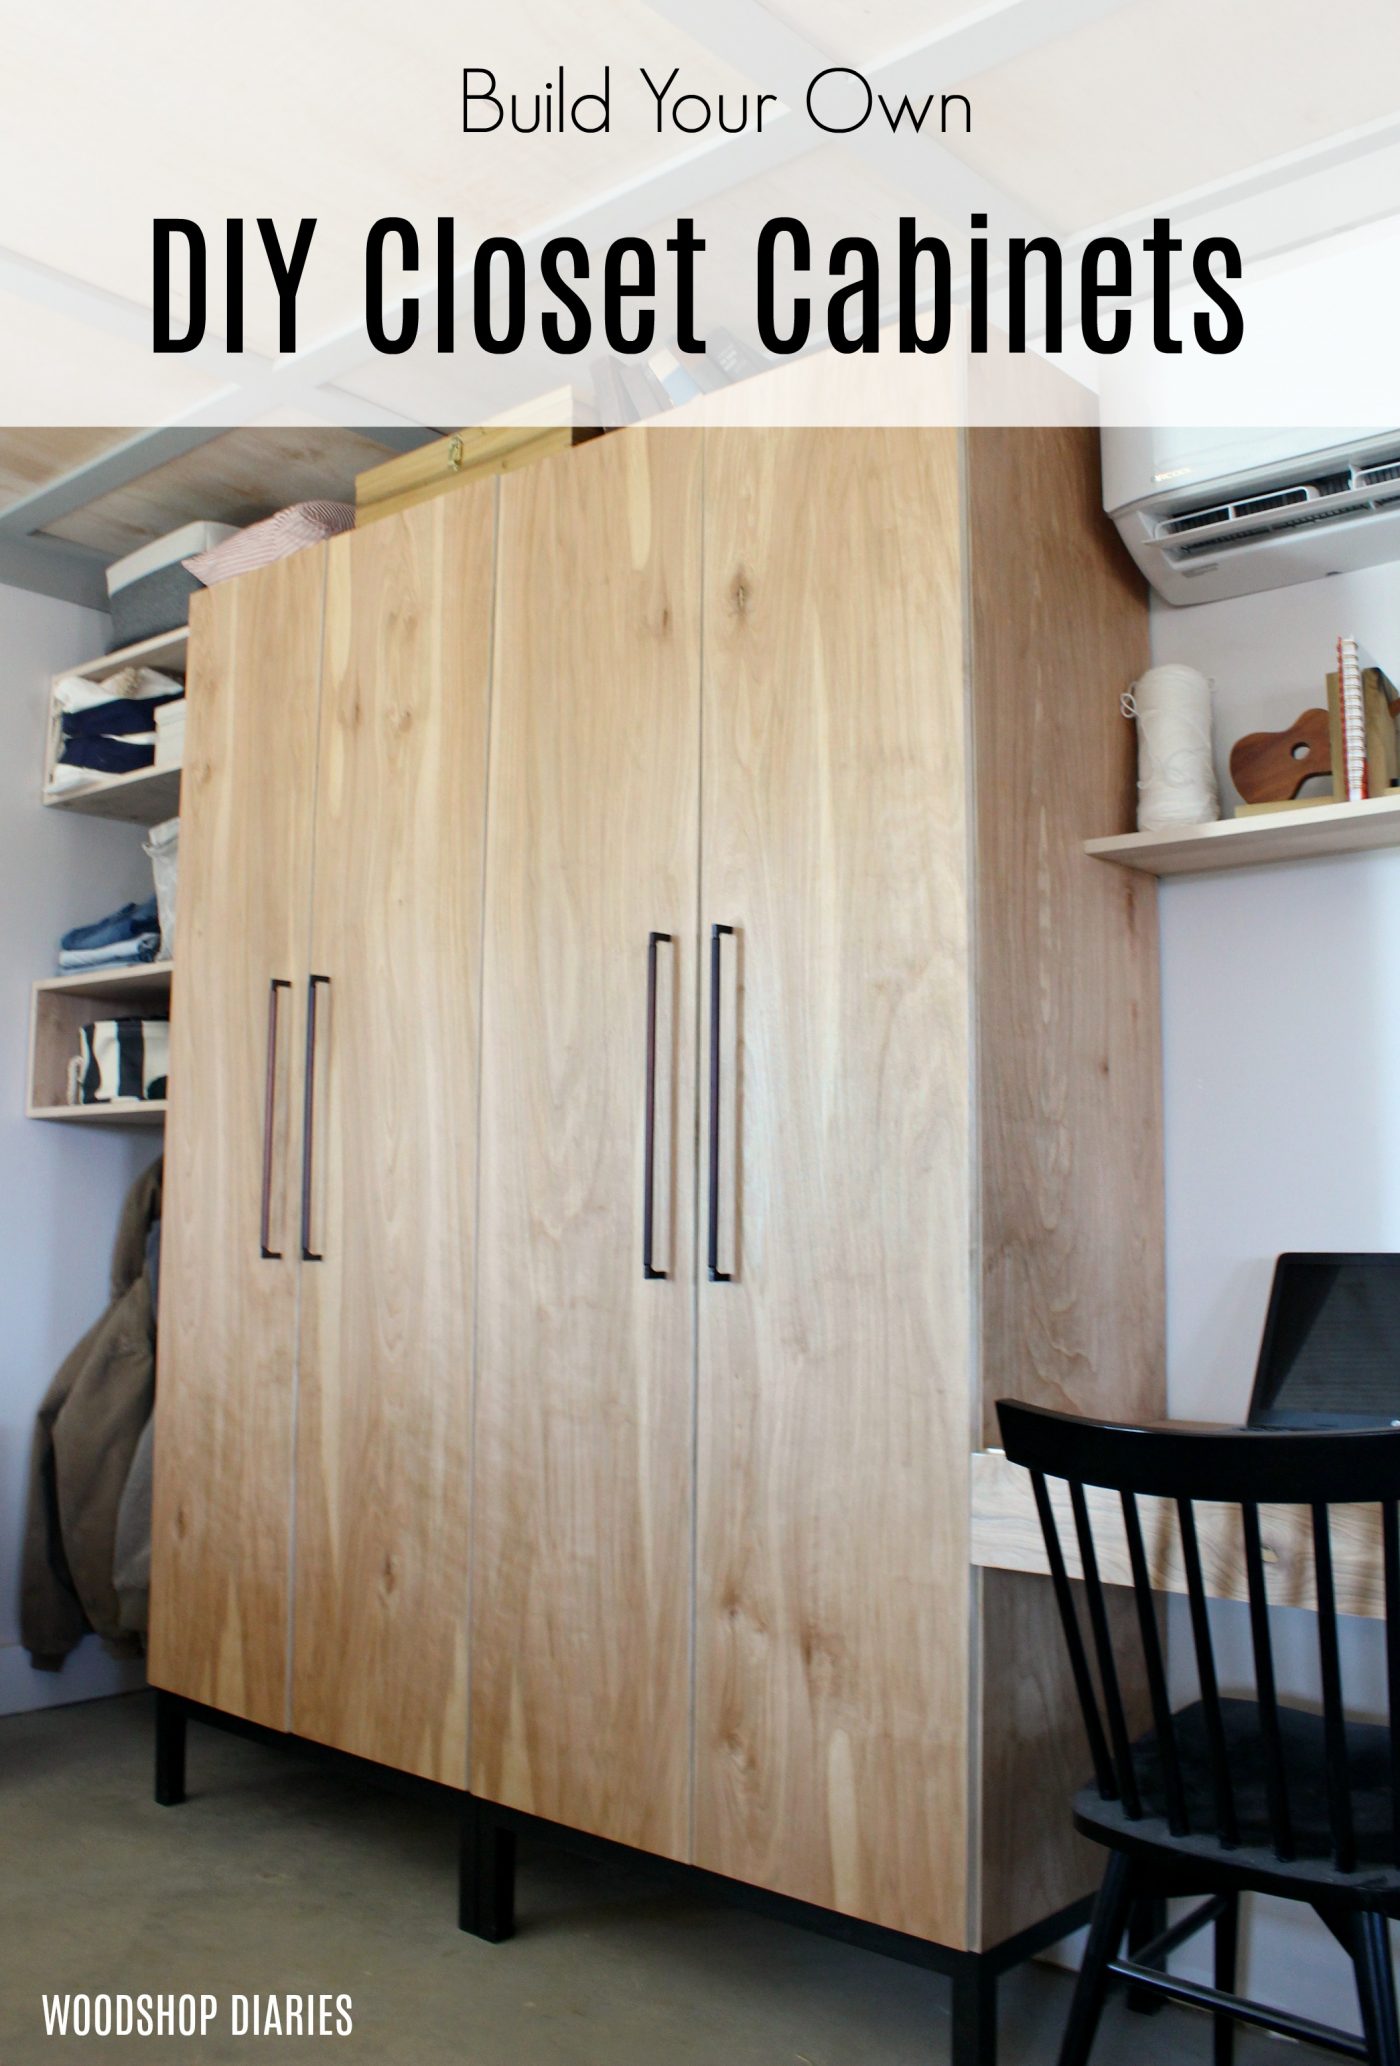 https://www.woodshopdiaries.com/wp-content/uploads/2019/03/DIY-Closet-Cabinets-Pin.jpg